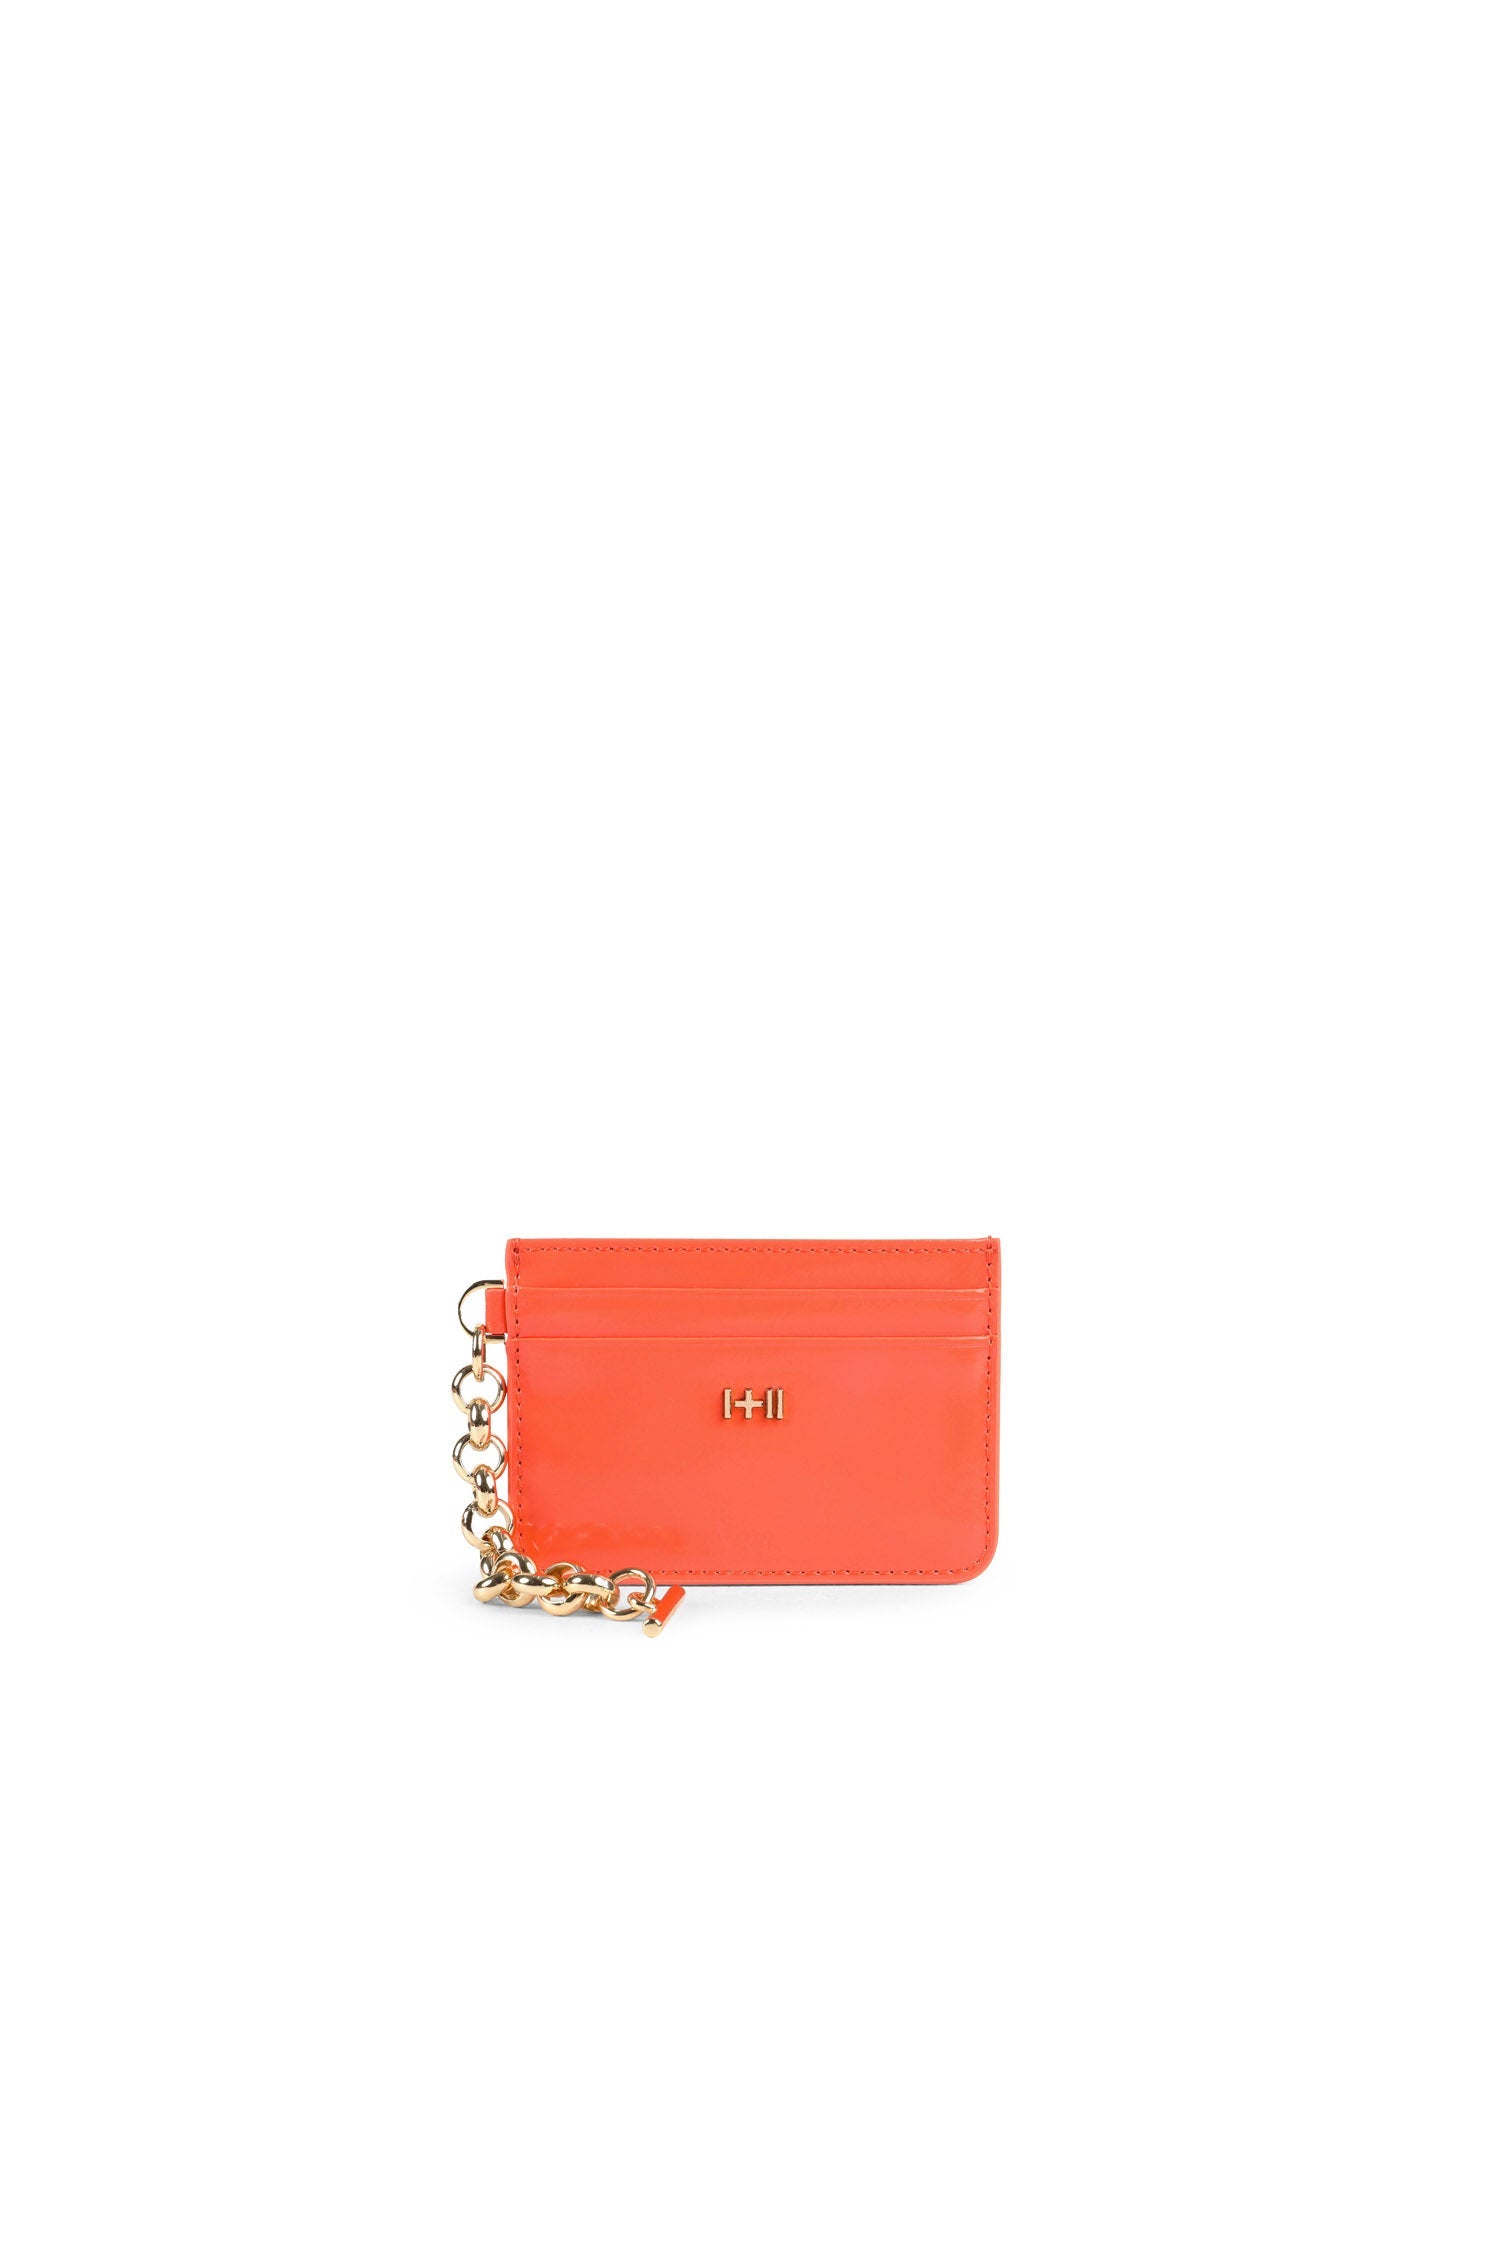 The Yumi Card Holder Orange Sunset - Gift Edit